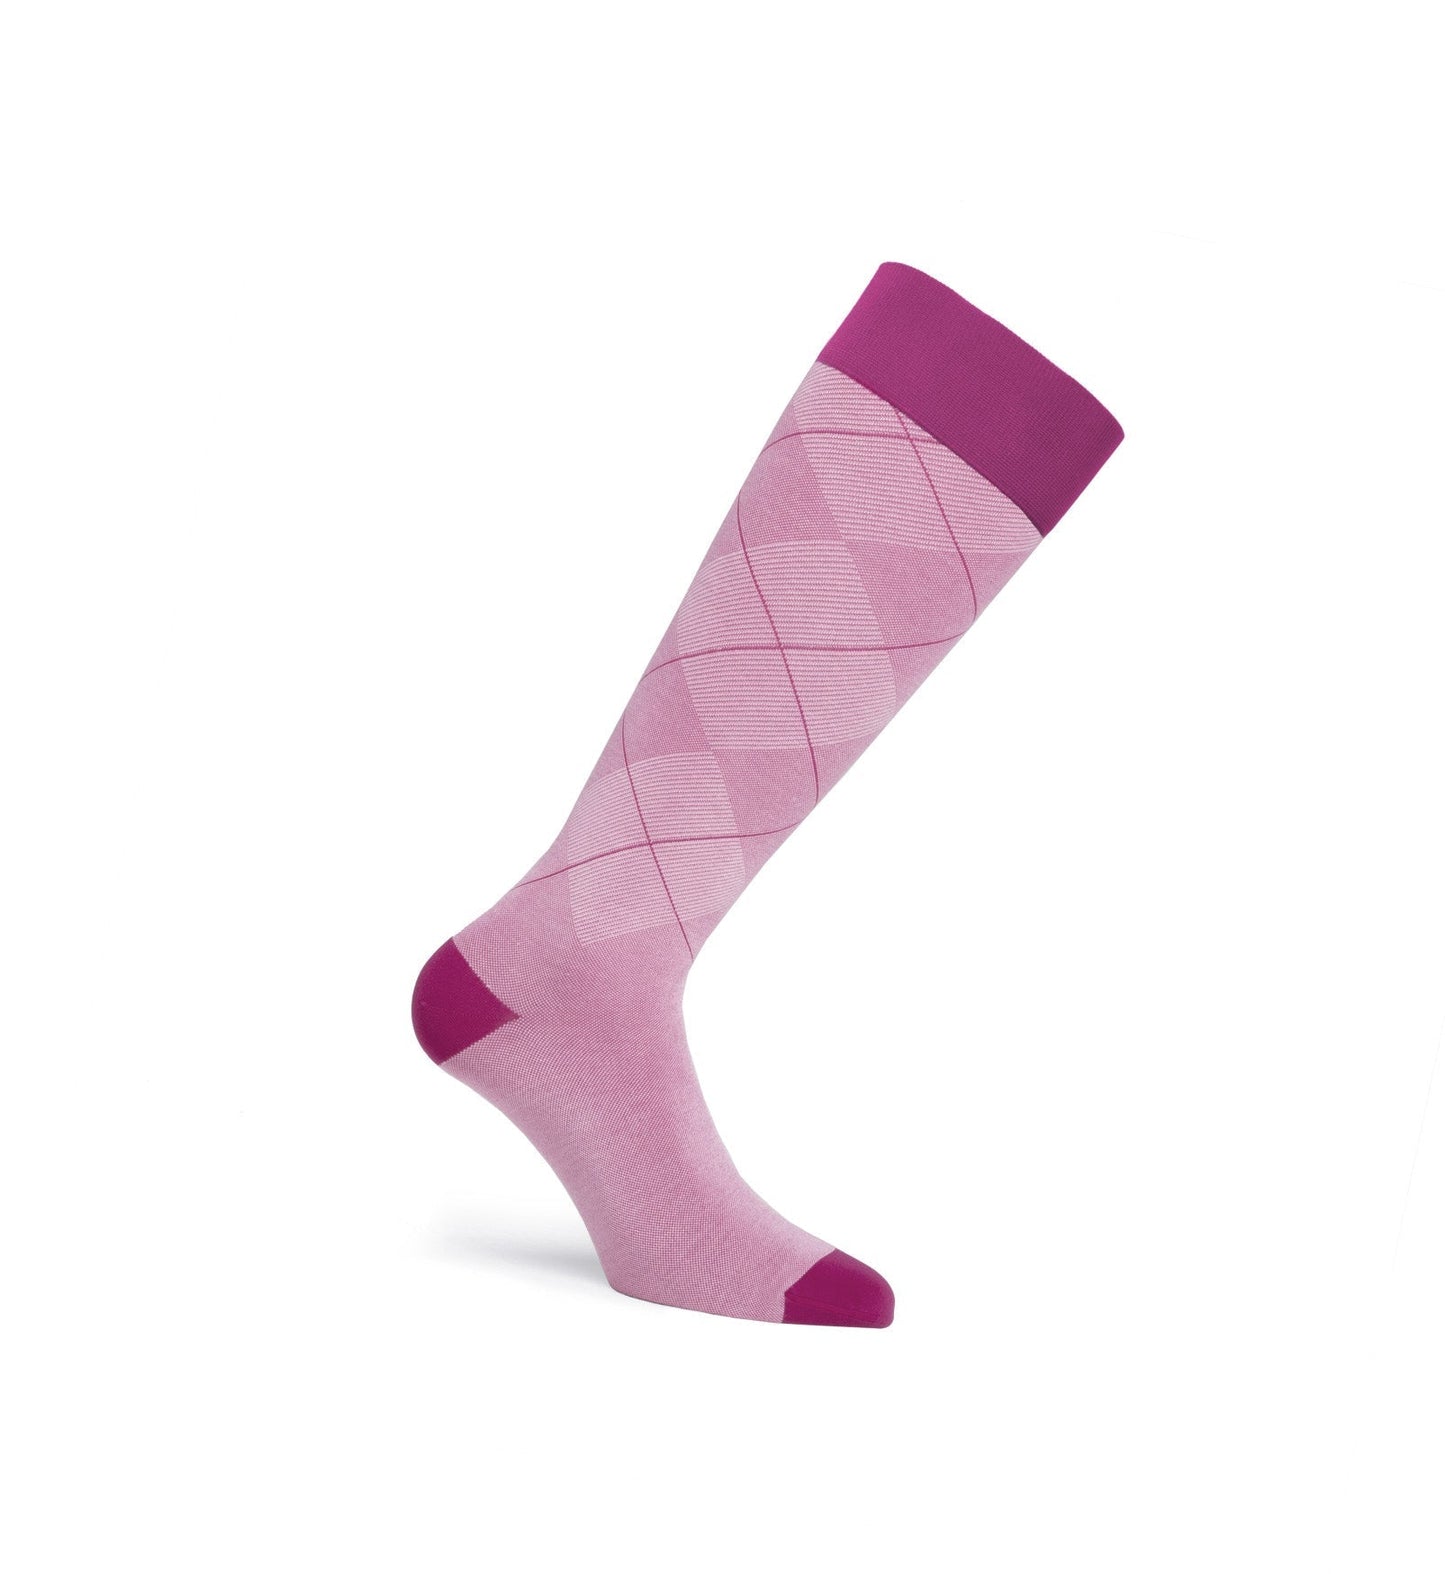 JOBST Casual Pattern Compression Socks 15-20 mmHg, Knee High, Closed Toe Full Calf